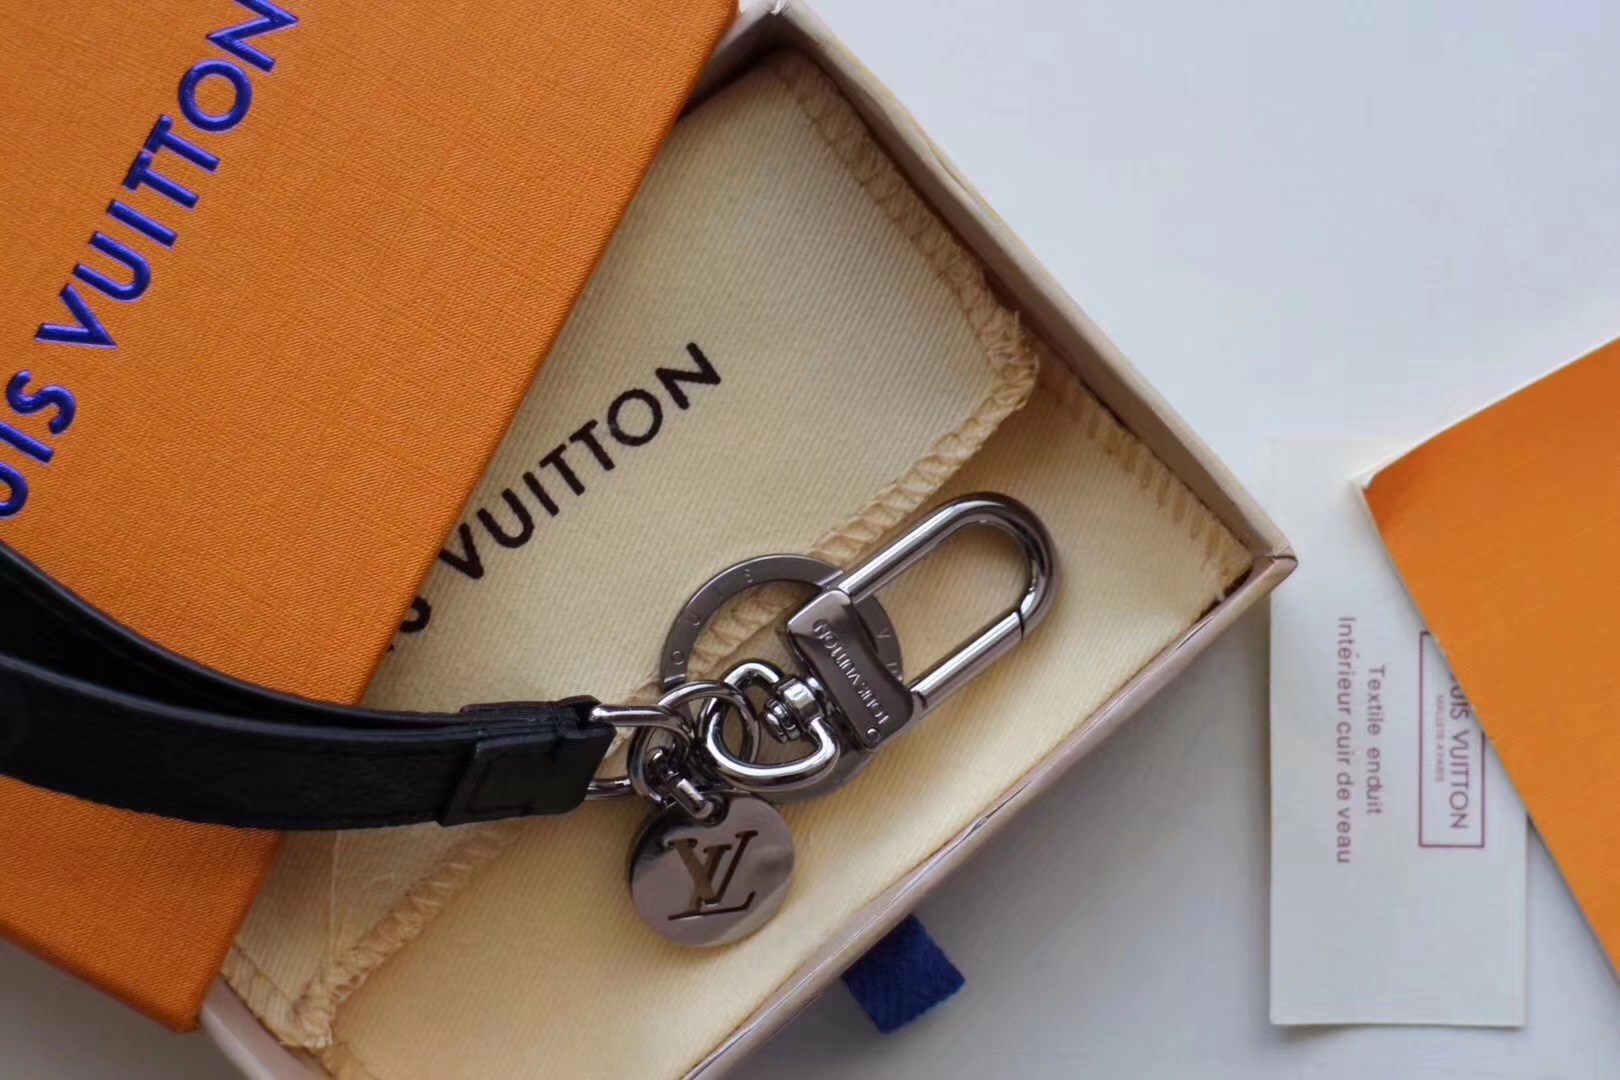 Shop Louis Vuitton Dragonne bag charm & key holder (M61950) by ROHA